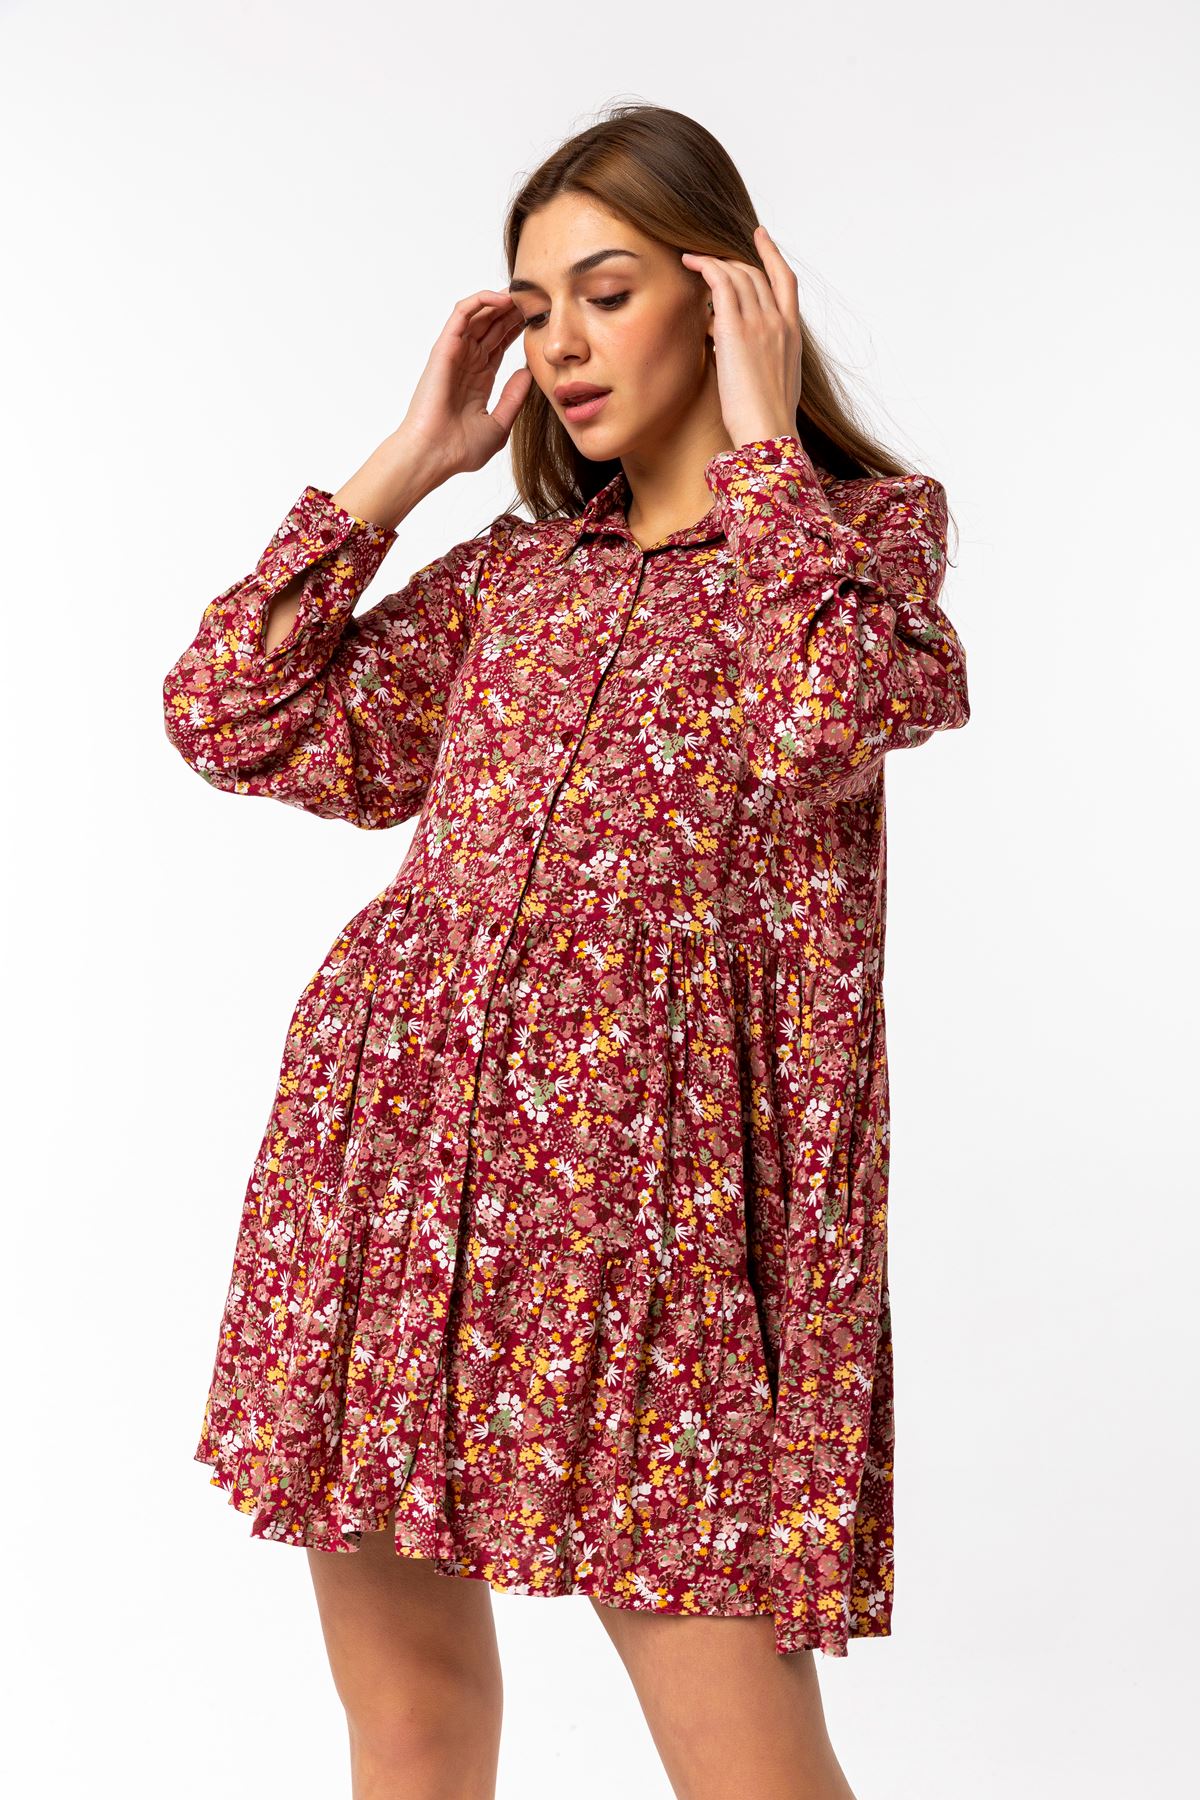 Viscose Fabric Long Sleeve Mini Wide Flower Print Women Dress - Burgundy